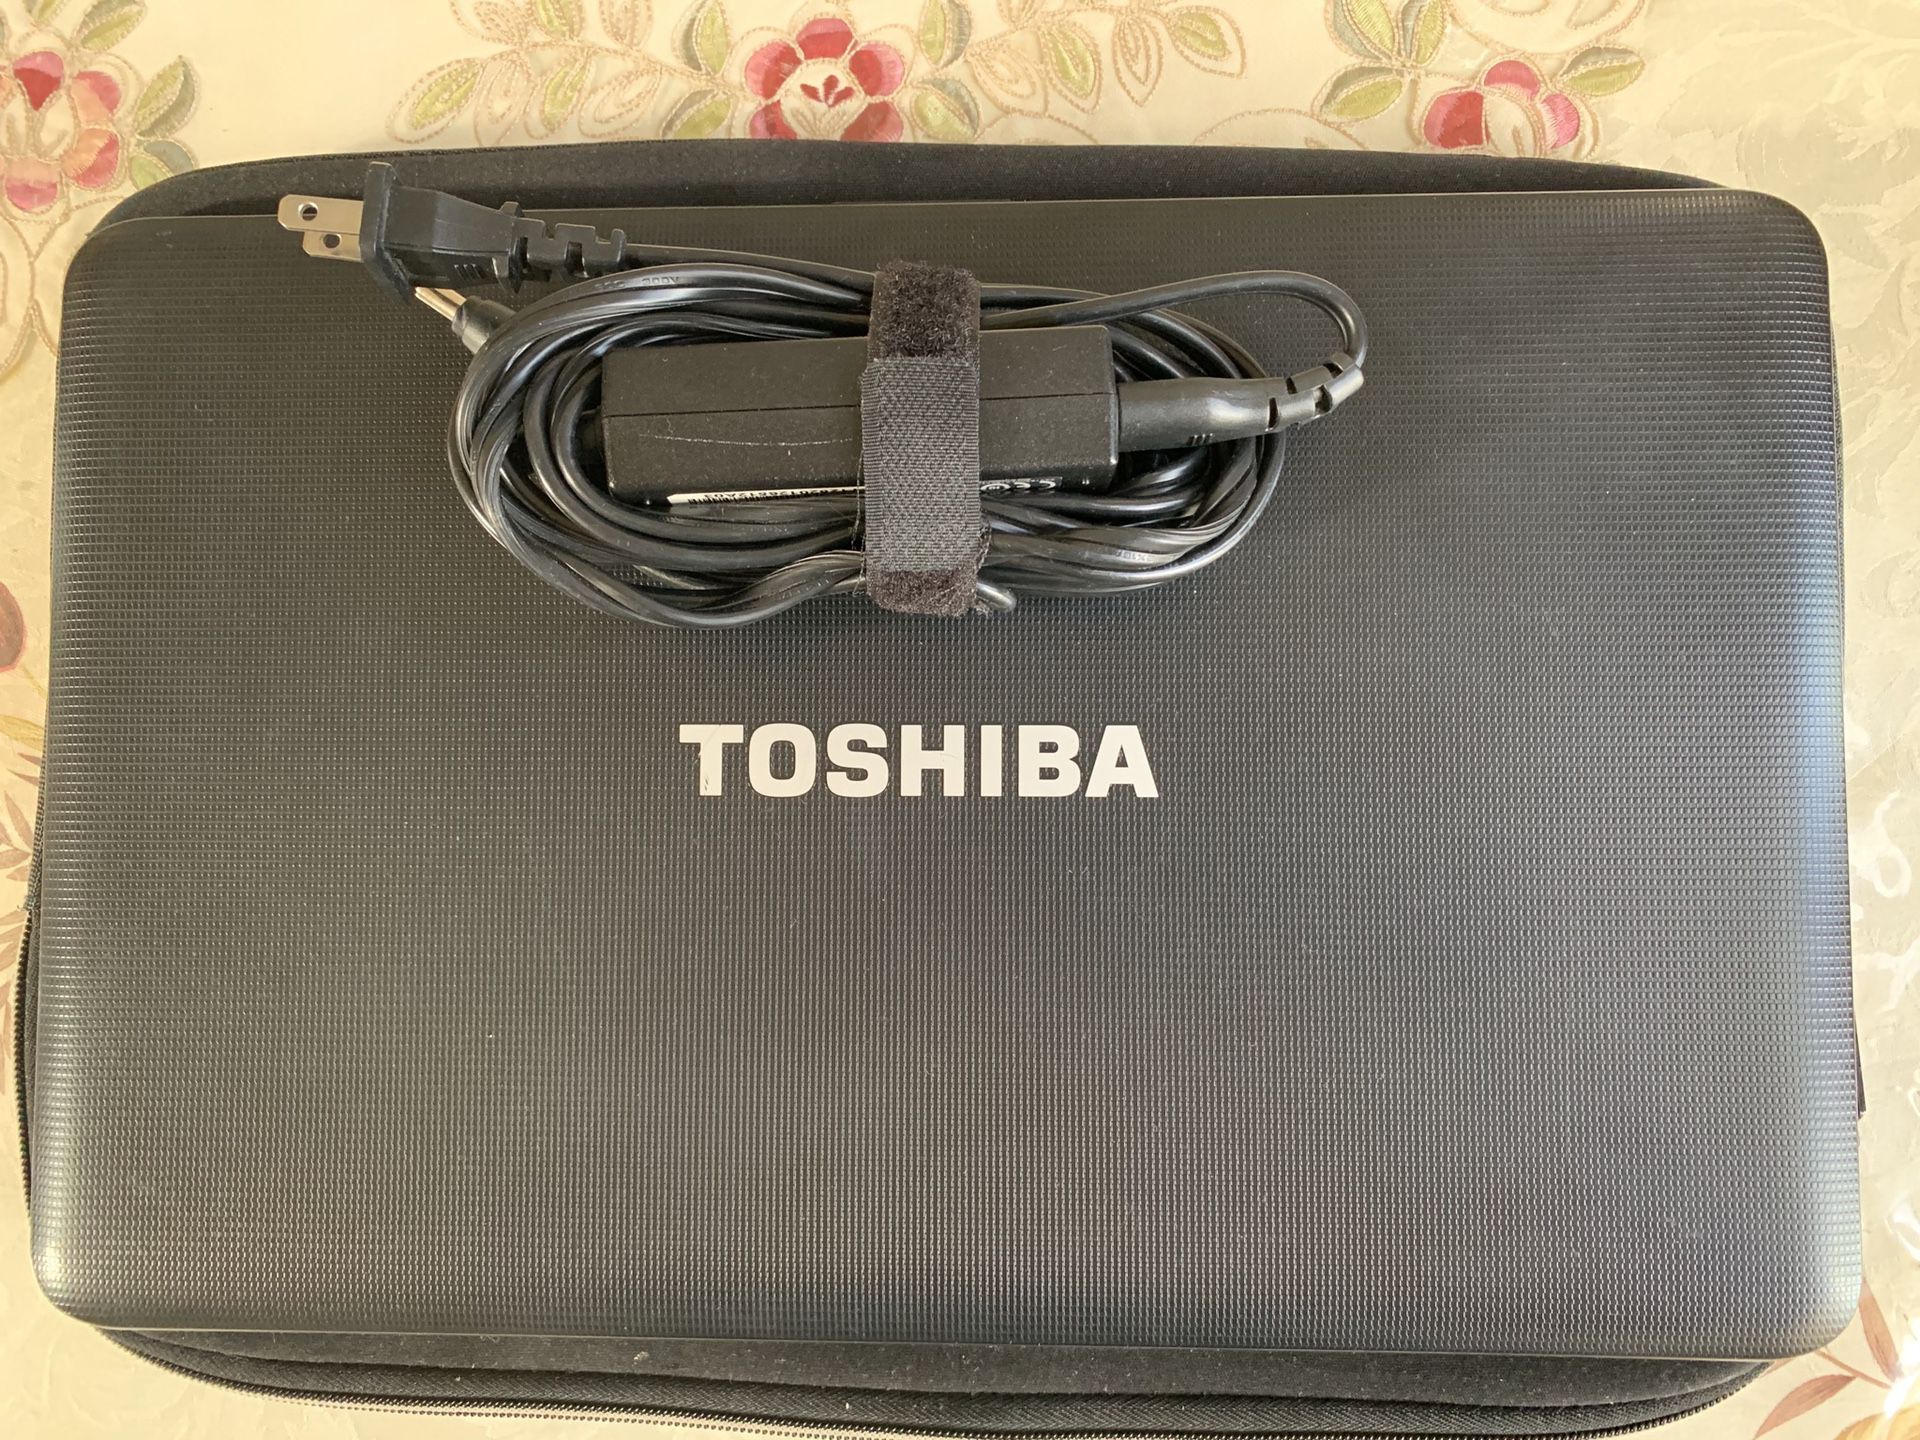 Toshiba Satellite C855-S5346 15.6" Laptop Computer Windows 10